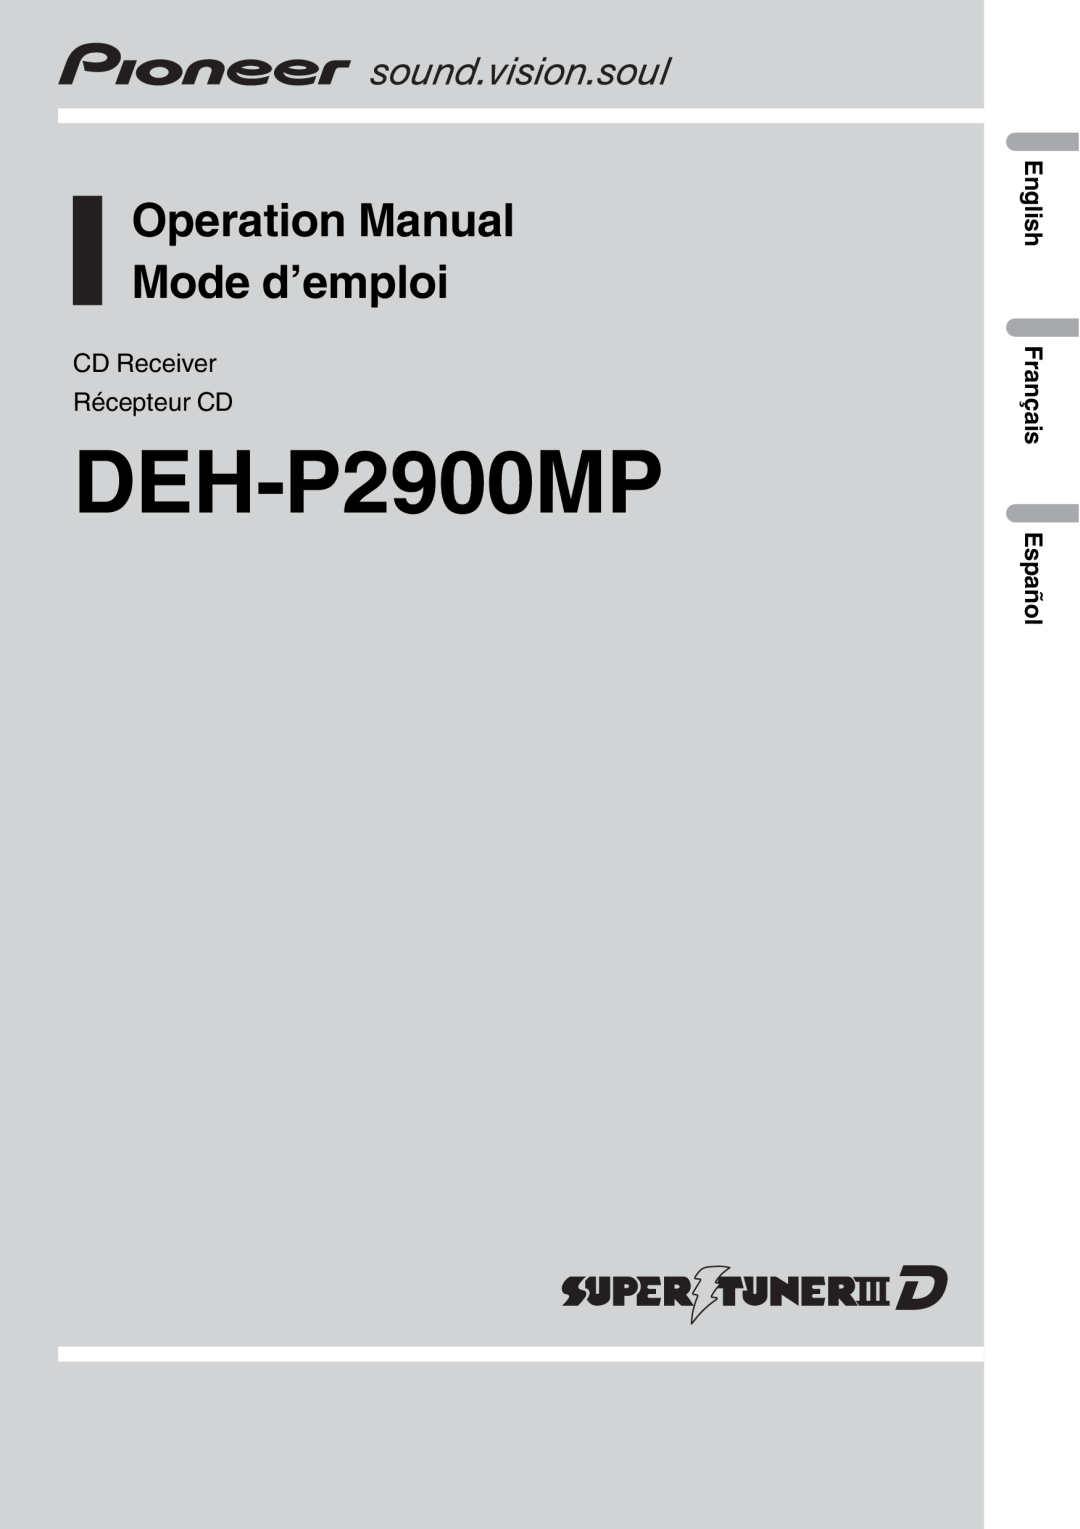 Sony DEH-P2900MP operation manual CD Receiver Récepteur CD, English Français Español, Operation Manual Mode d’emploi 